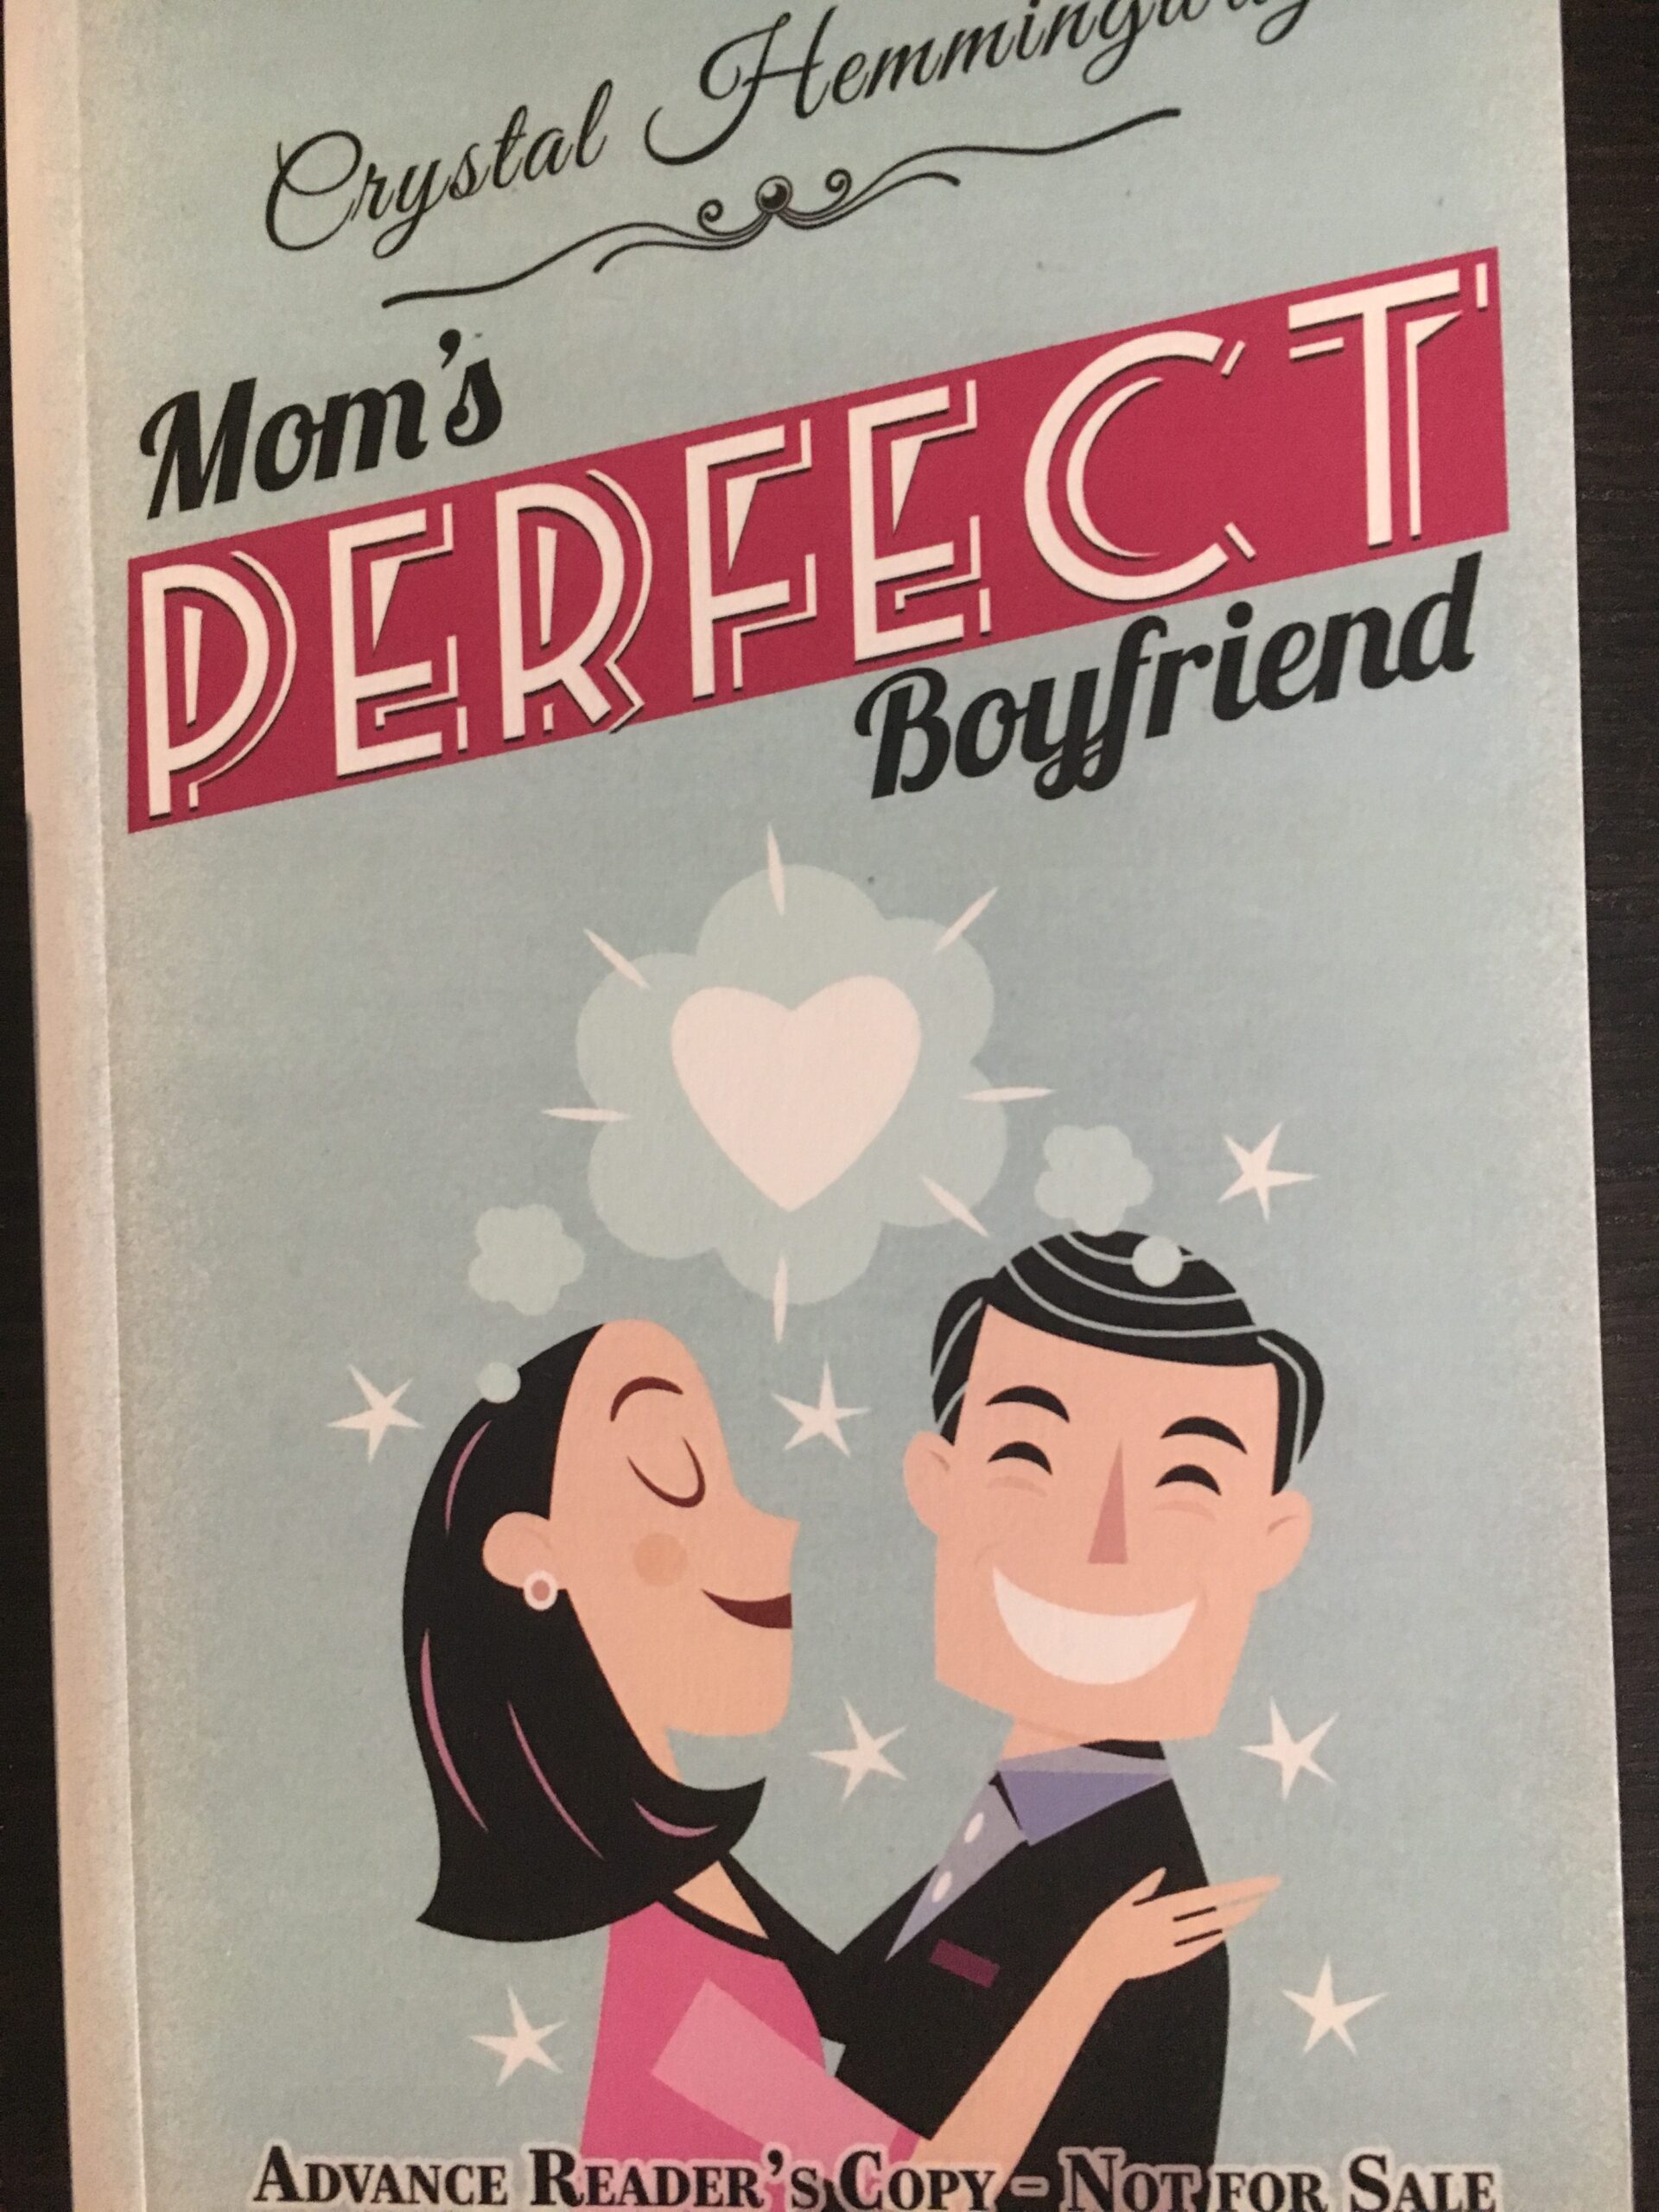 Mom's Perfect Boyfriend by Crystal Hemmingway